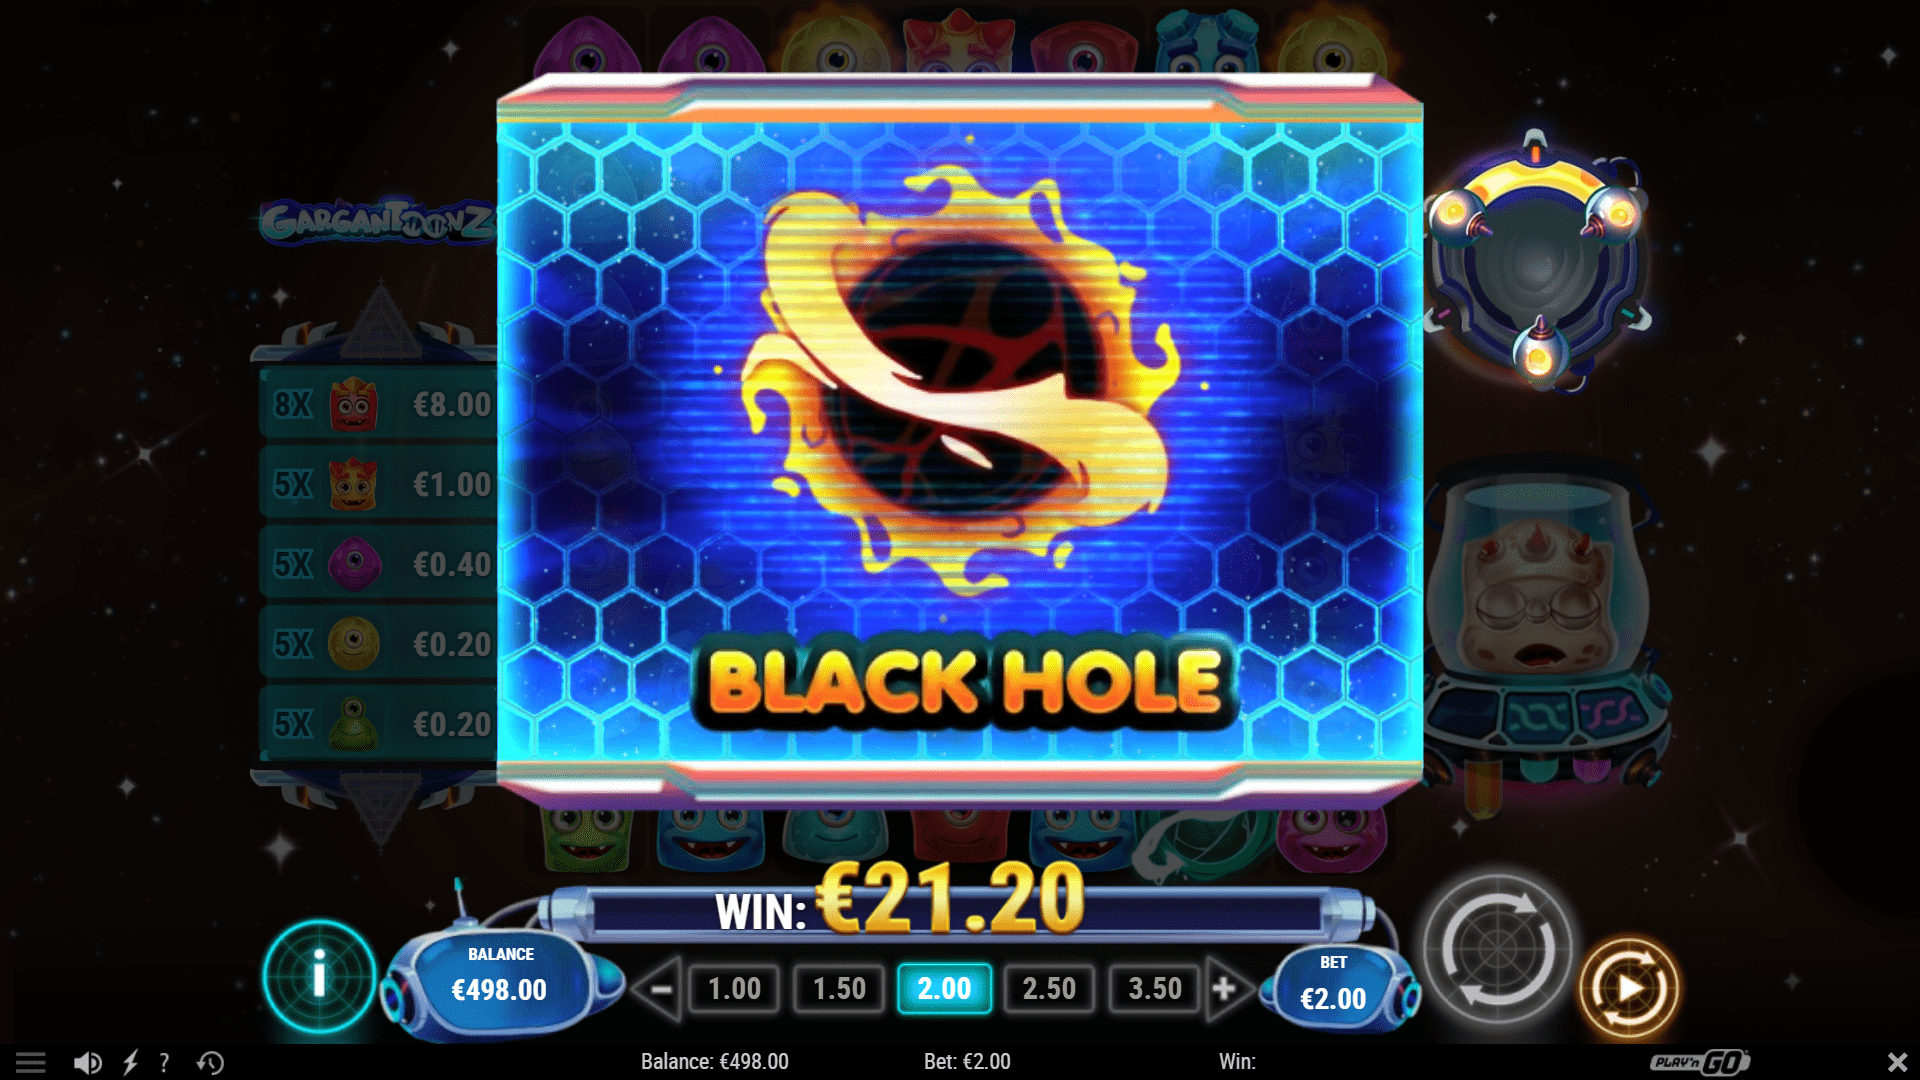 Gargantoonz Slot - Black Hole Feature